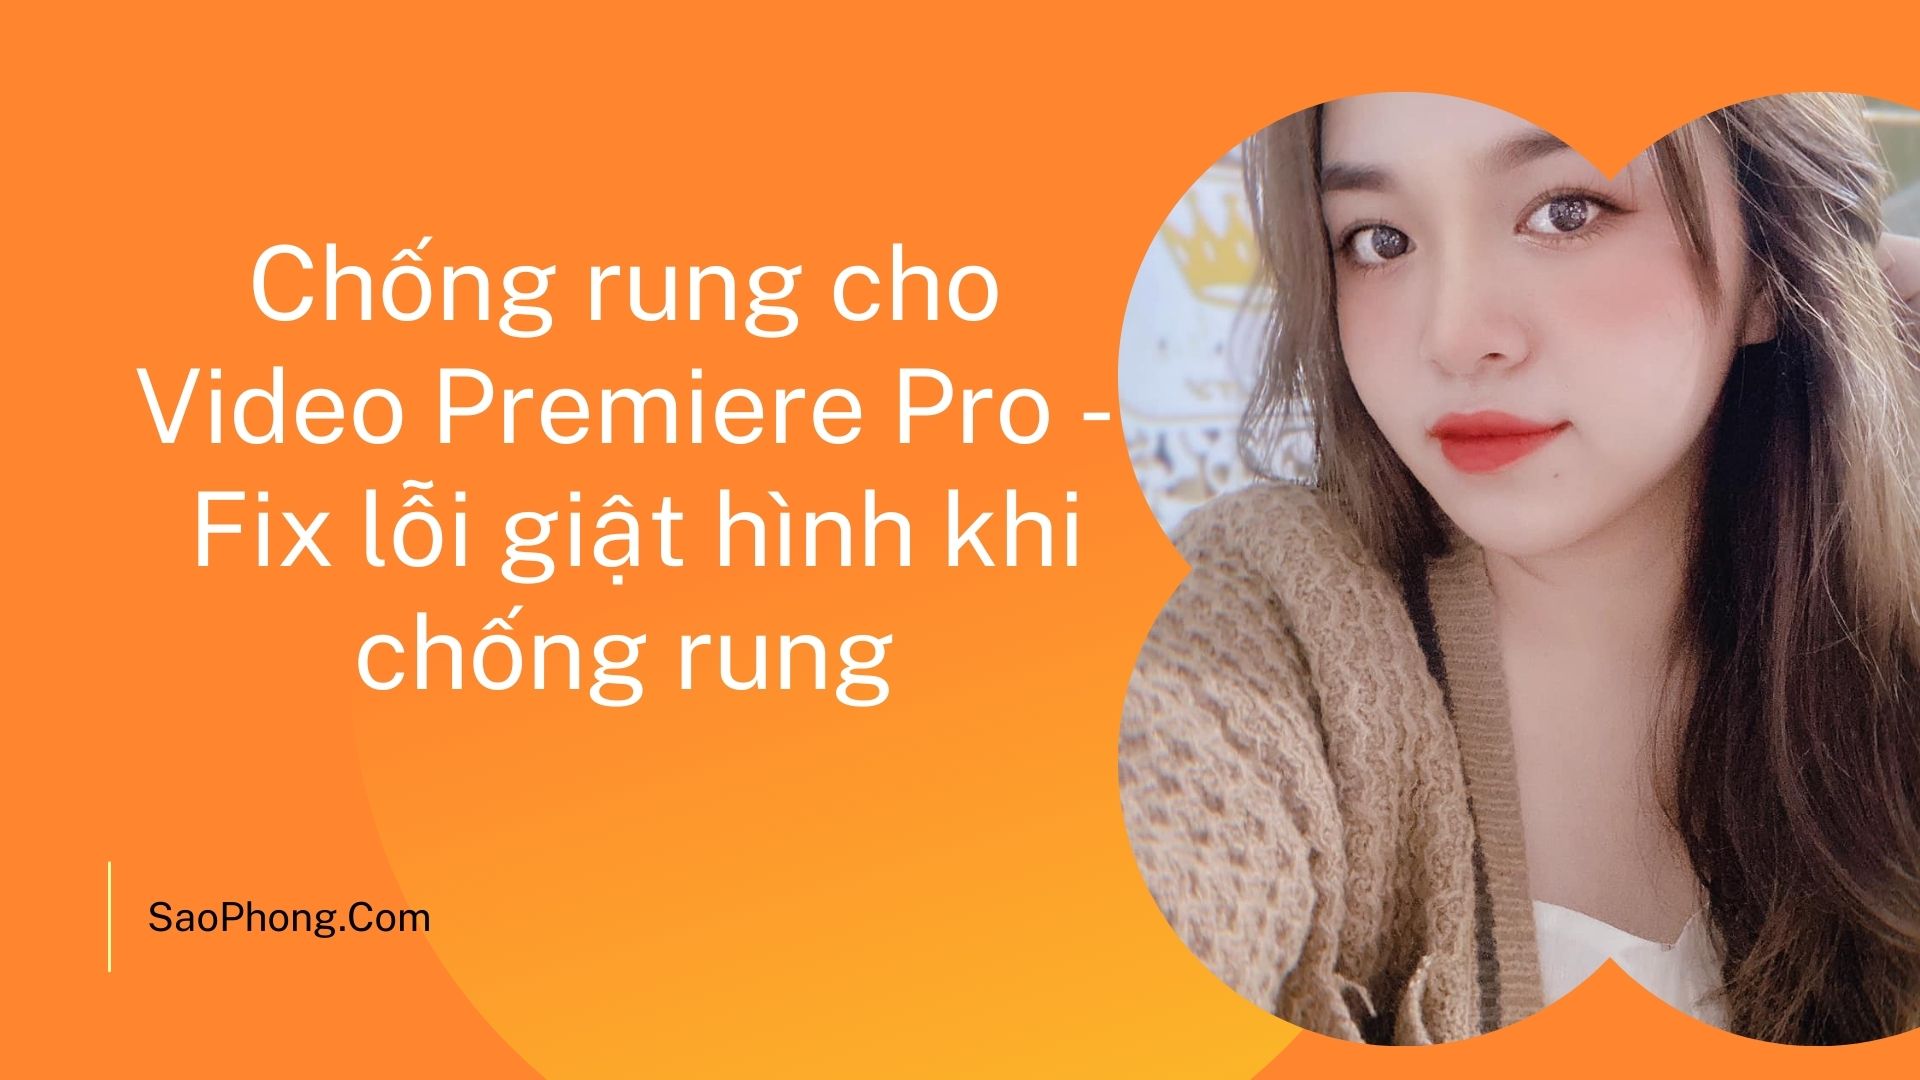 chong-rung-cho-video-premiere-pro-fix-loi-giat-hinh-khi-chong-rung